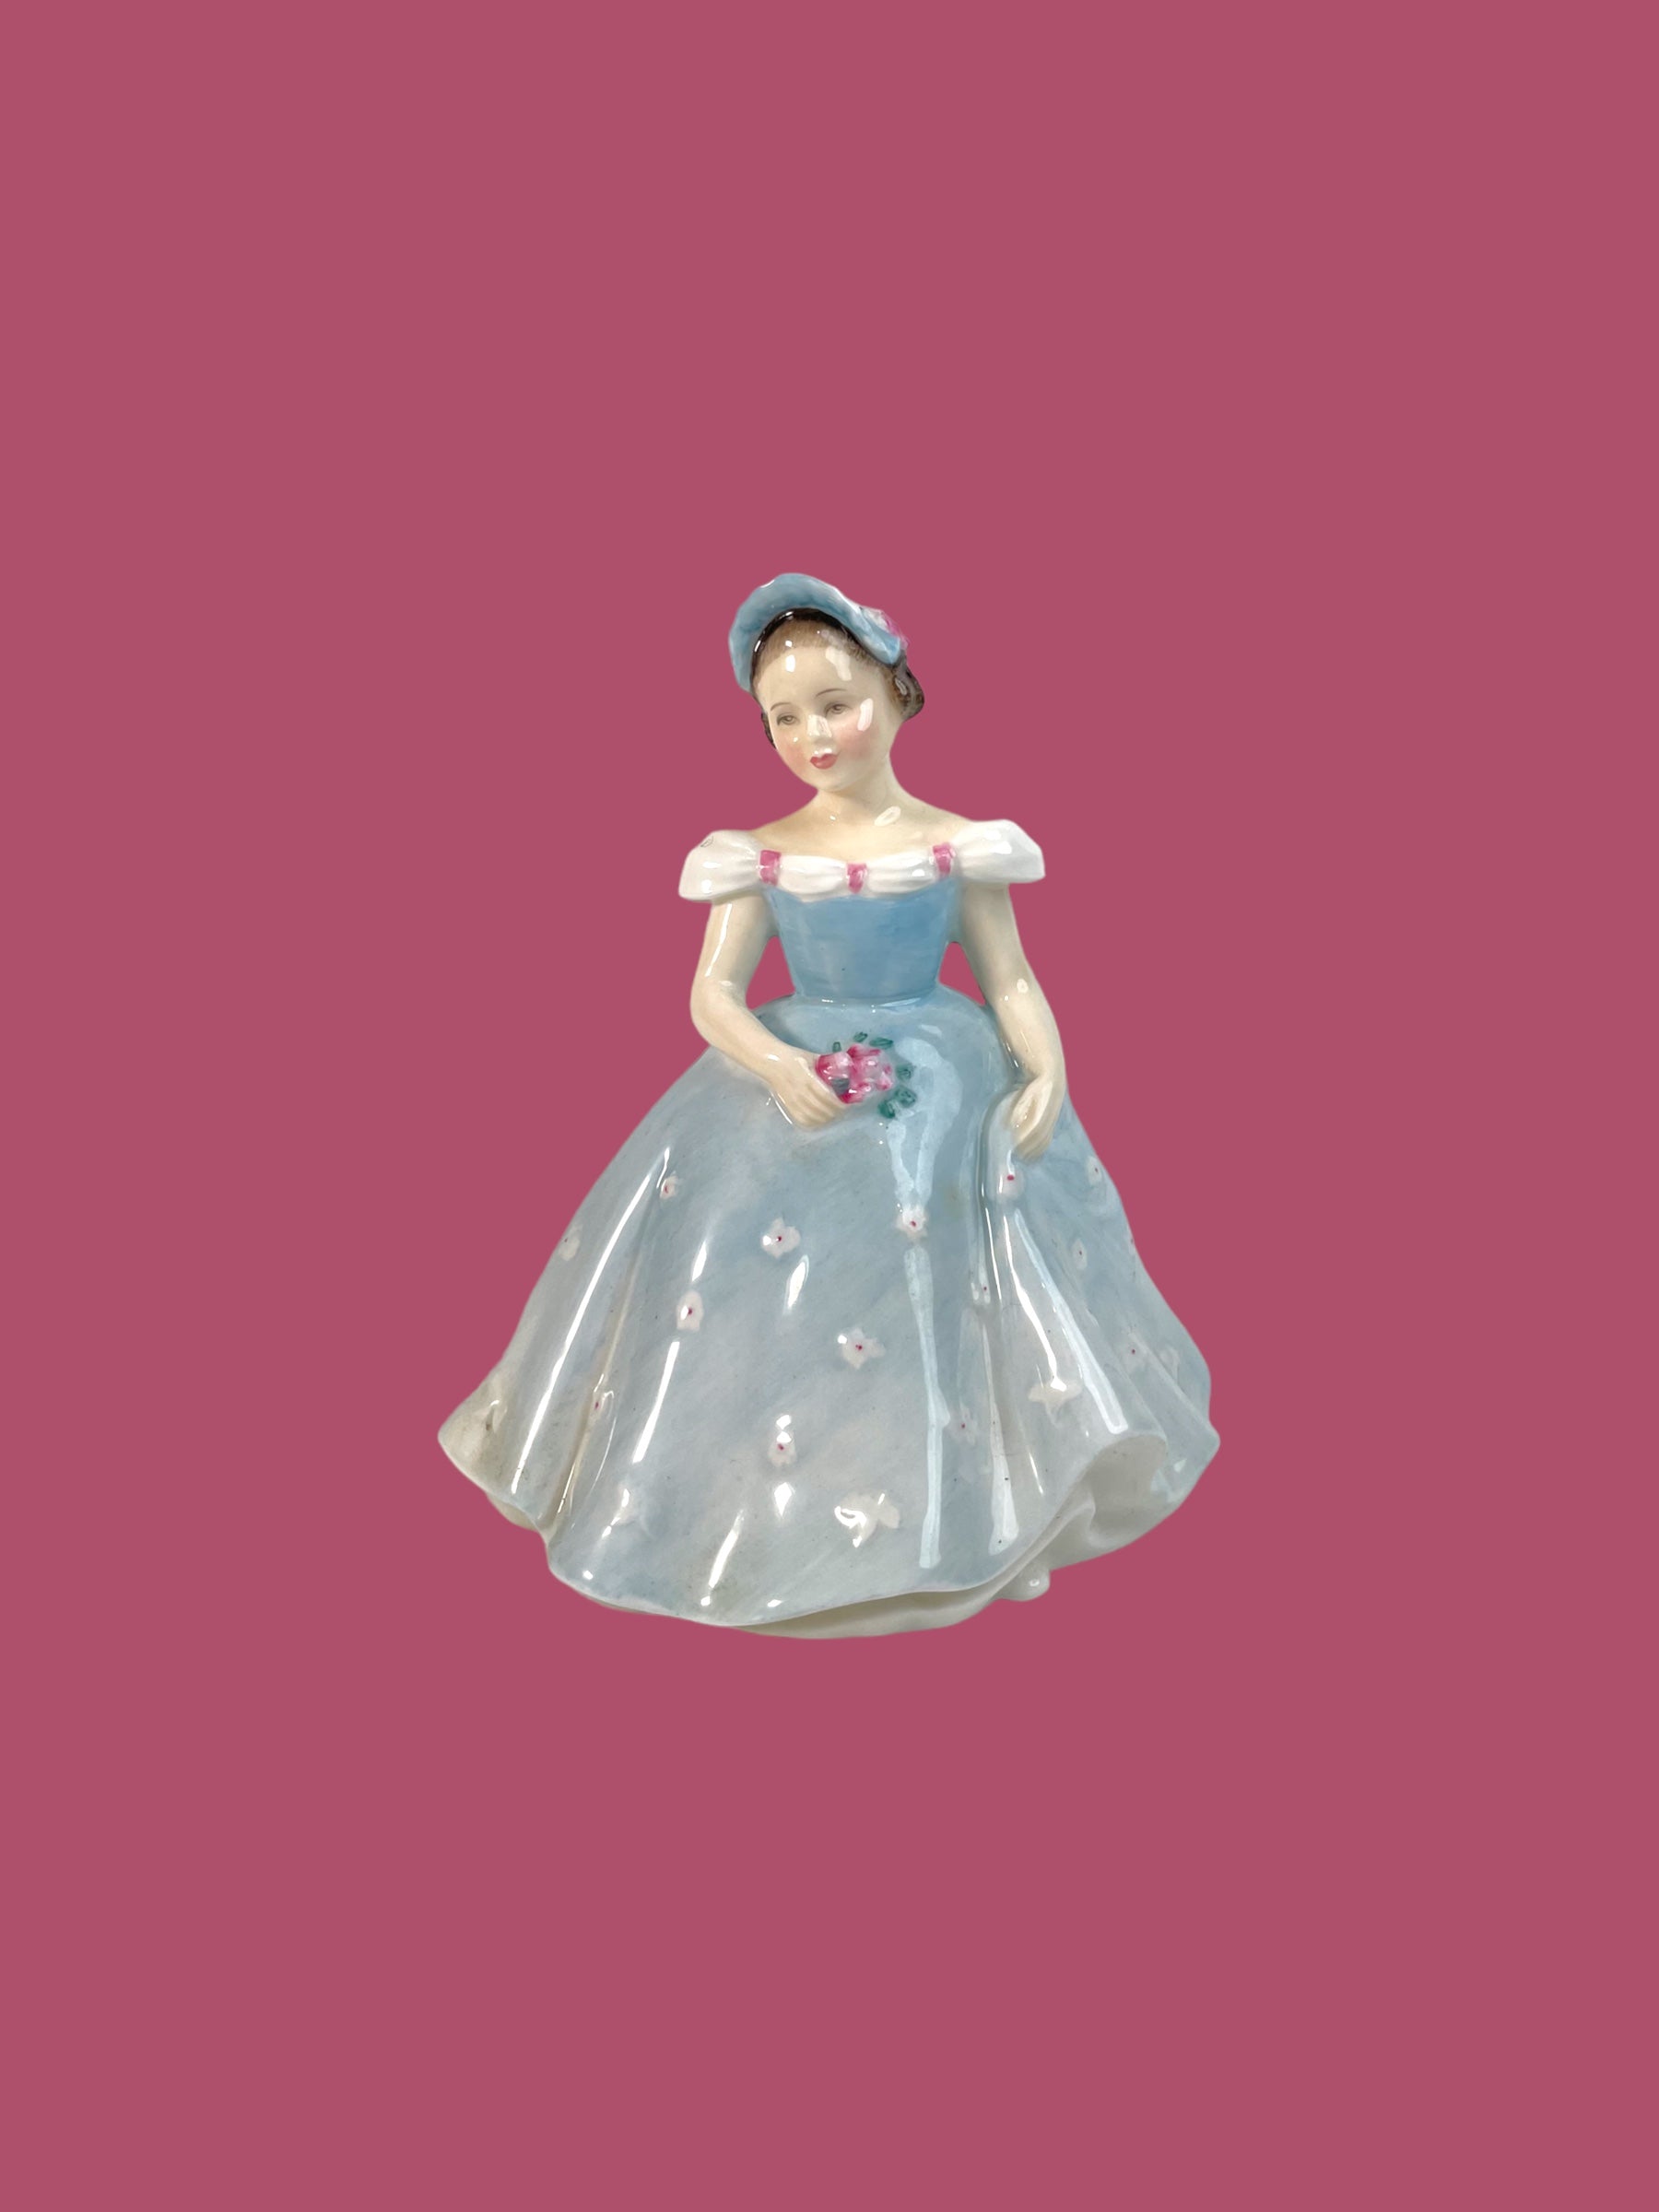 Royal Doulton 1959 HN2196 "The Bridesmaid" Figurine